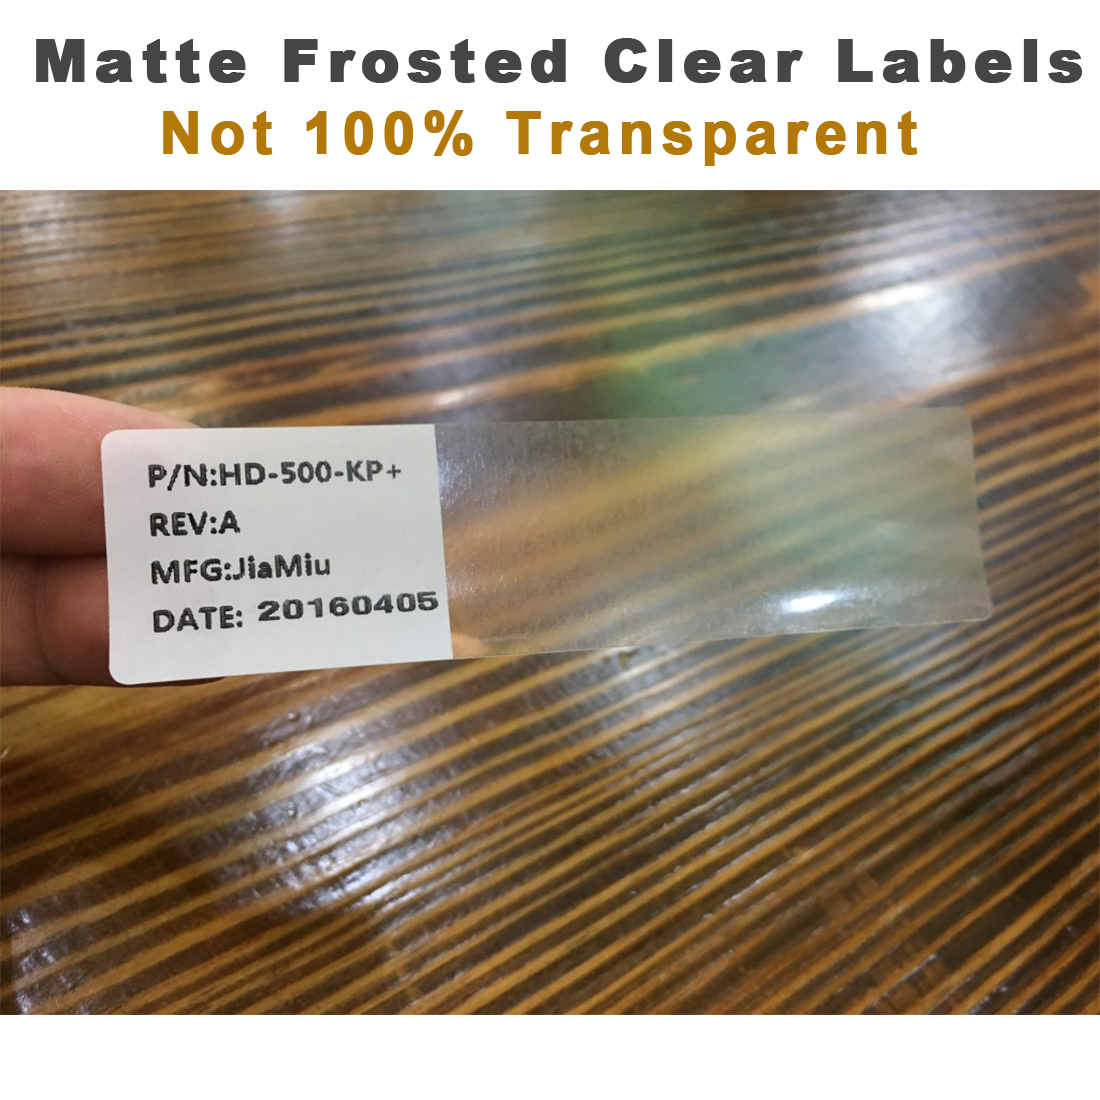 Mr-Label 2/3 x 1-3/4 Translucent Return Address Labels - Waterproof and  Tear-Resistant - for Inkjet & Laser Printer - Permanent Adhesive